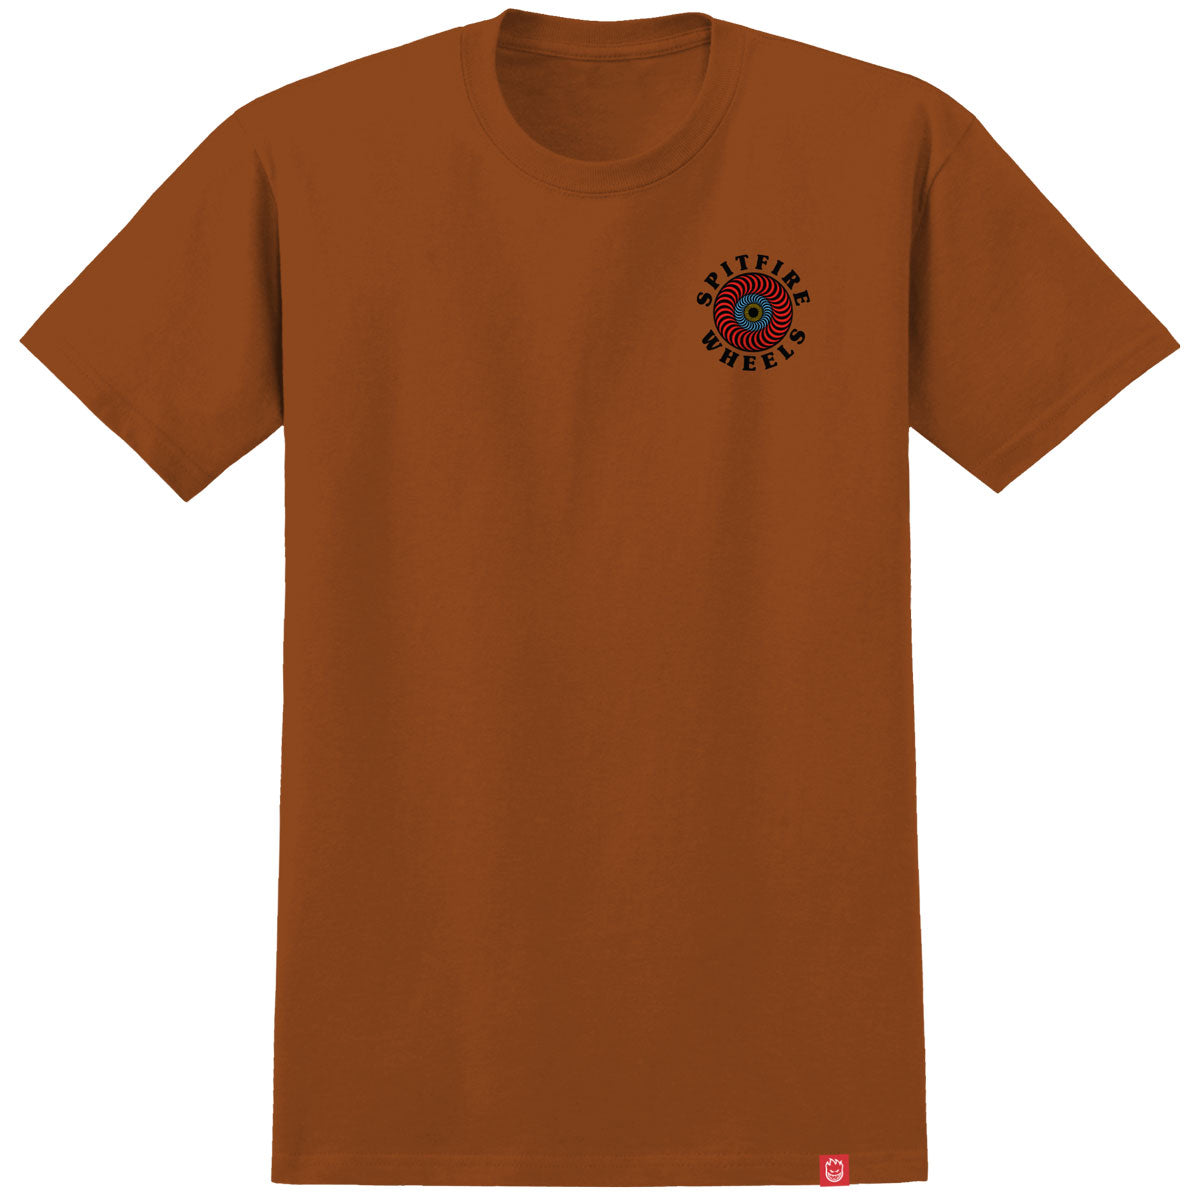 Spitfire Og Classic Fill T-Shirt - Orange/Multi image 2